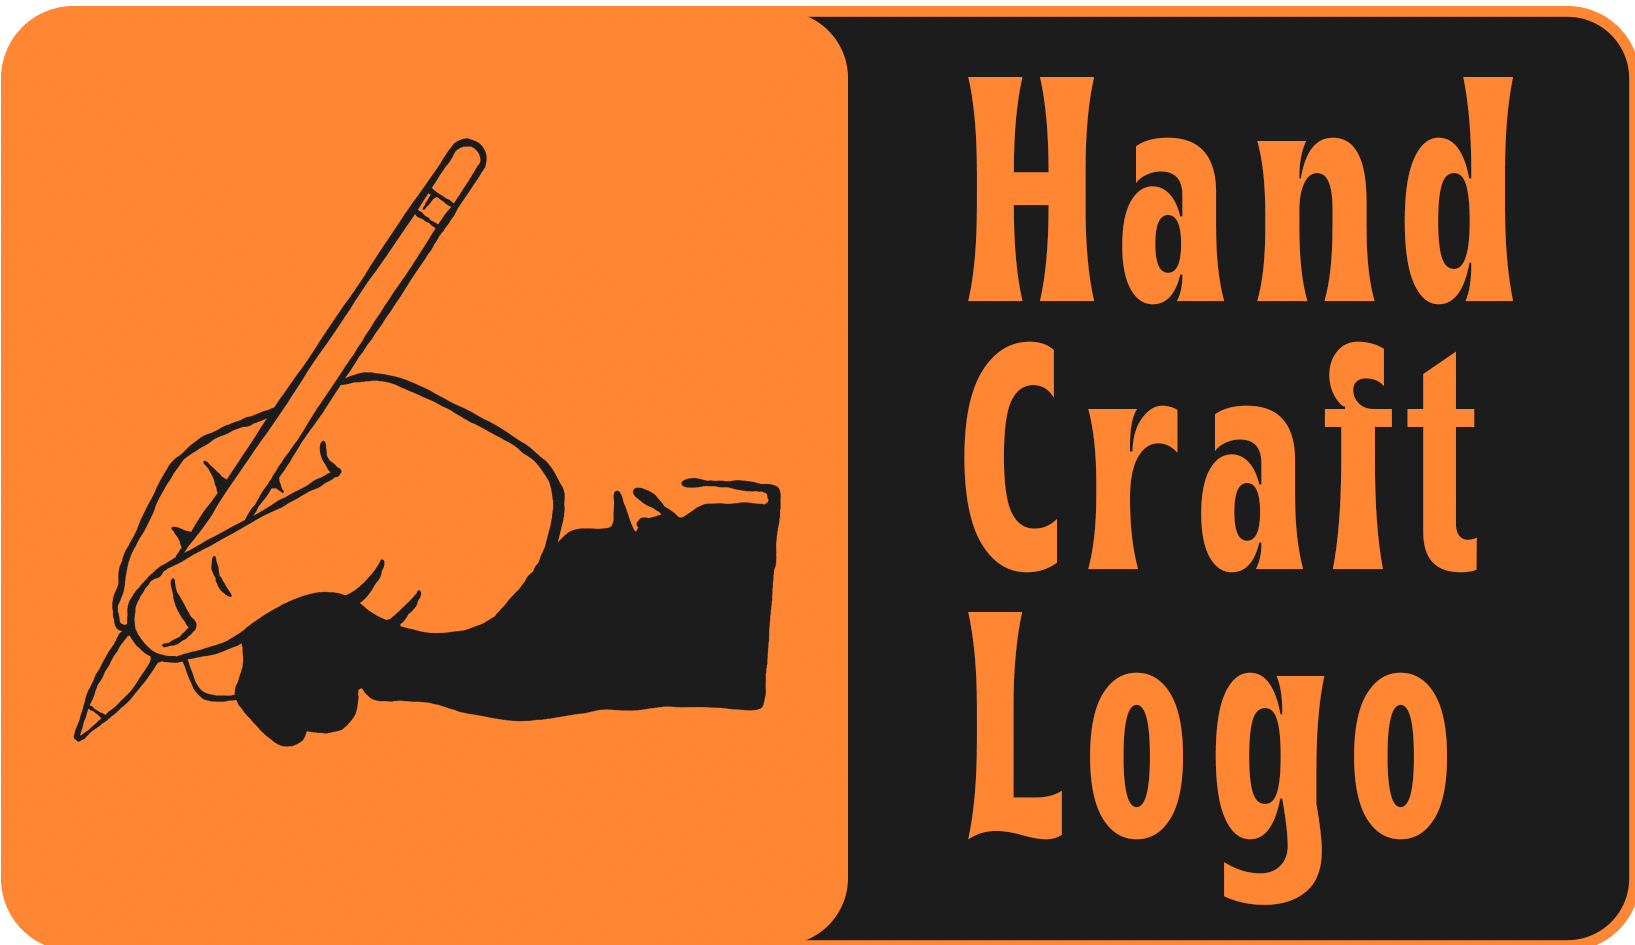 (c) Handcraftlogo.com